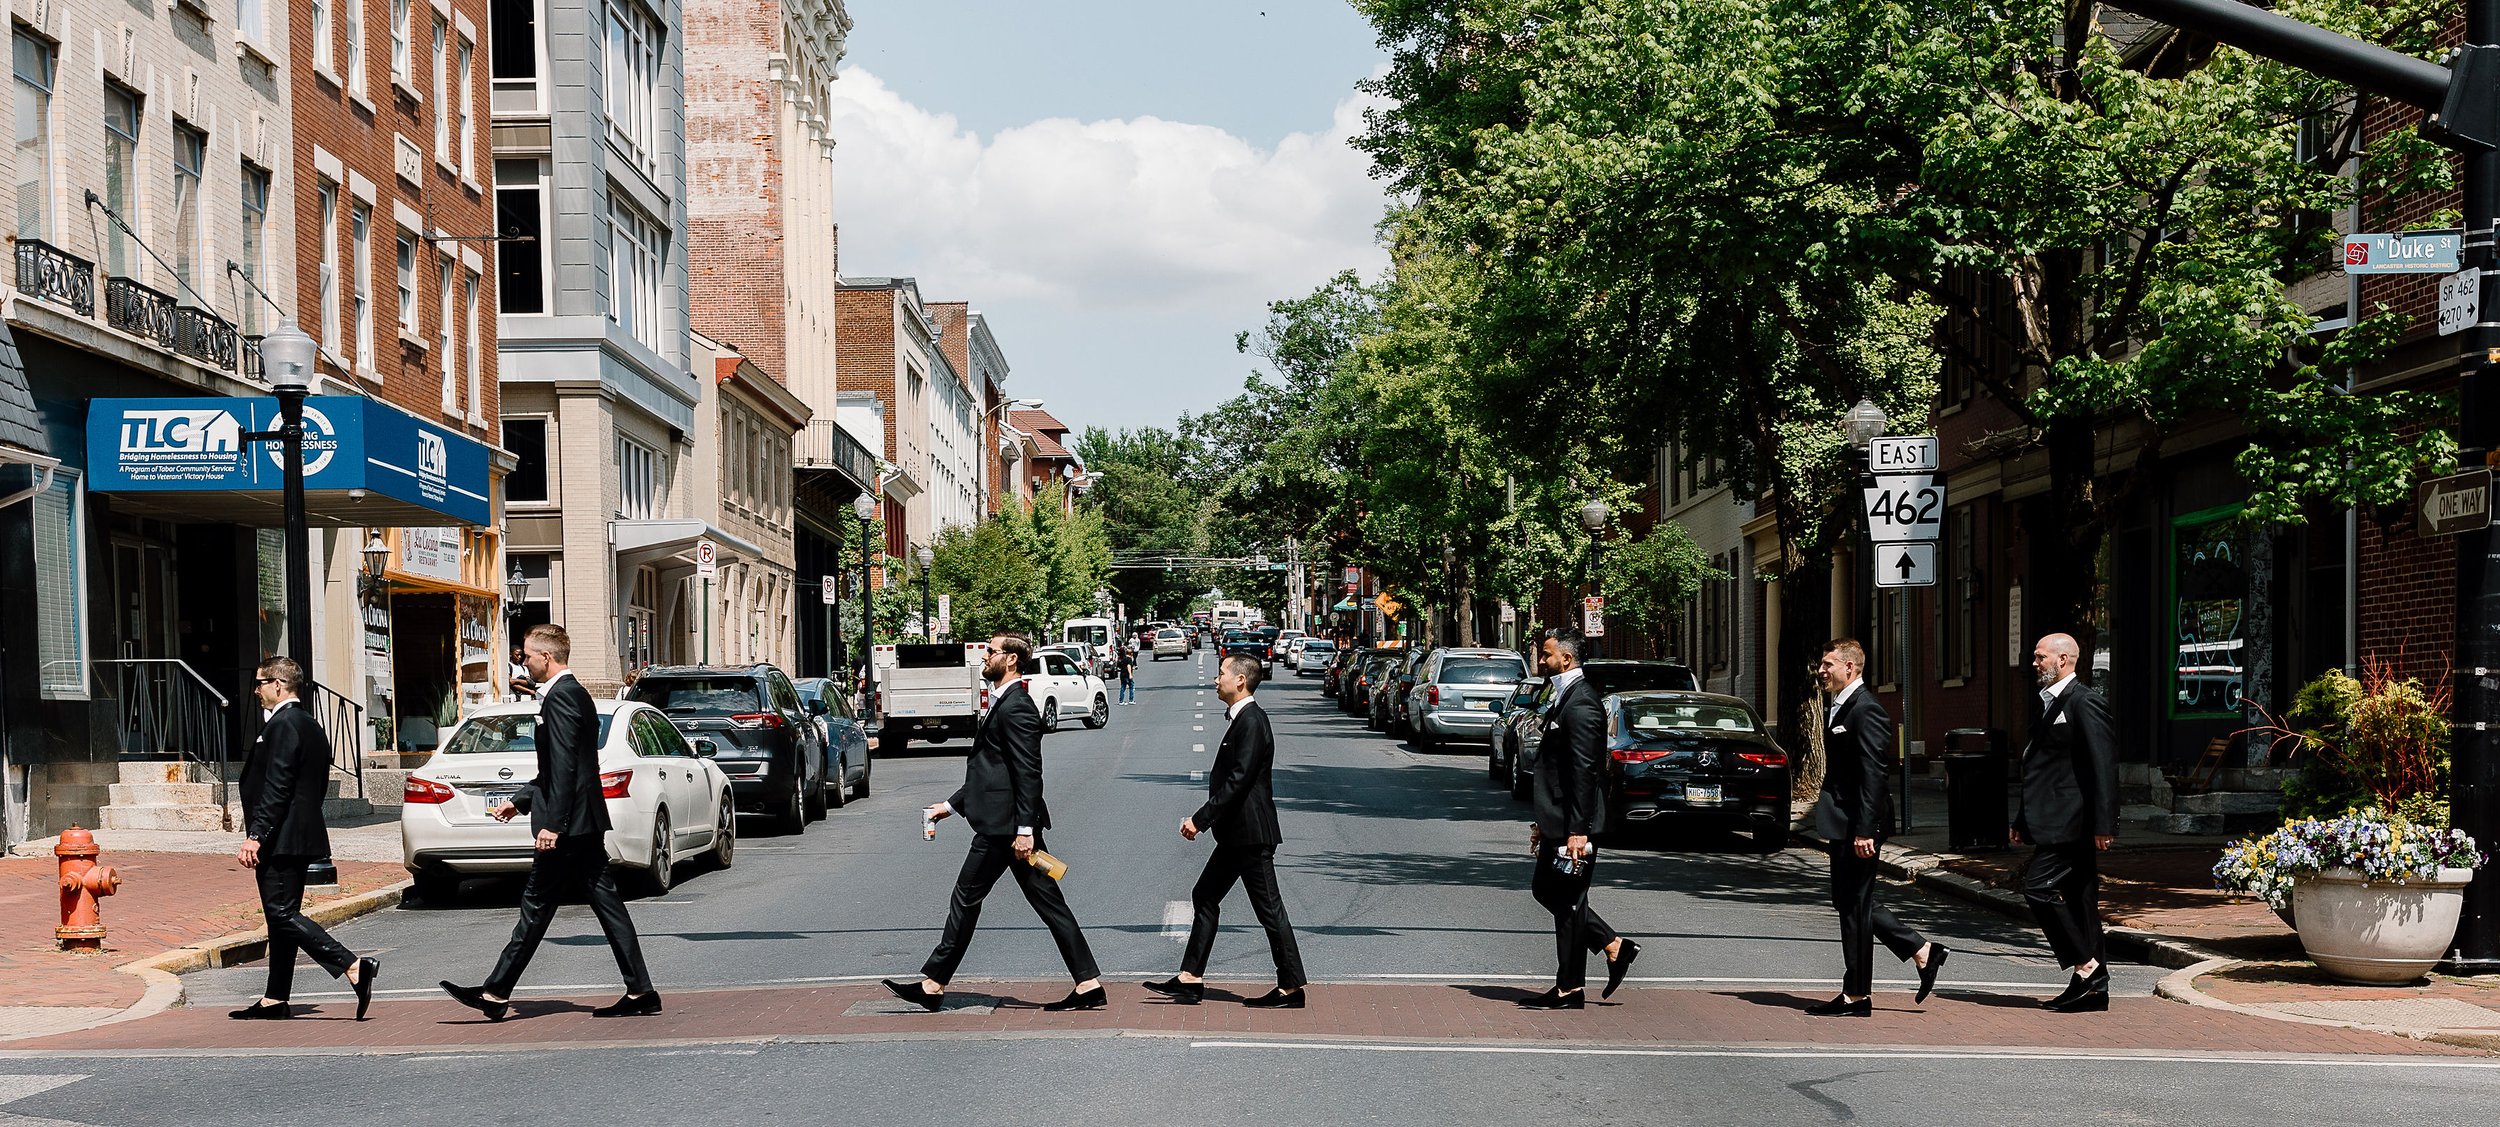 Groom and groomsmen walking across the street Lancaster city a la The Beatles Abbey Road